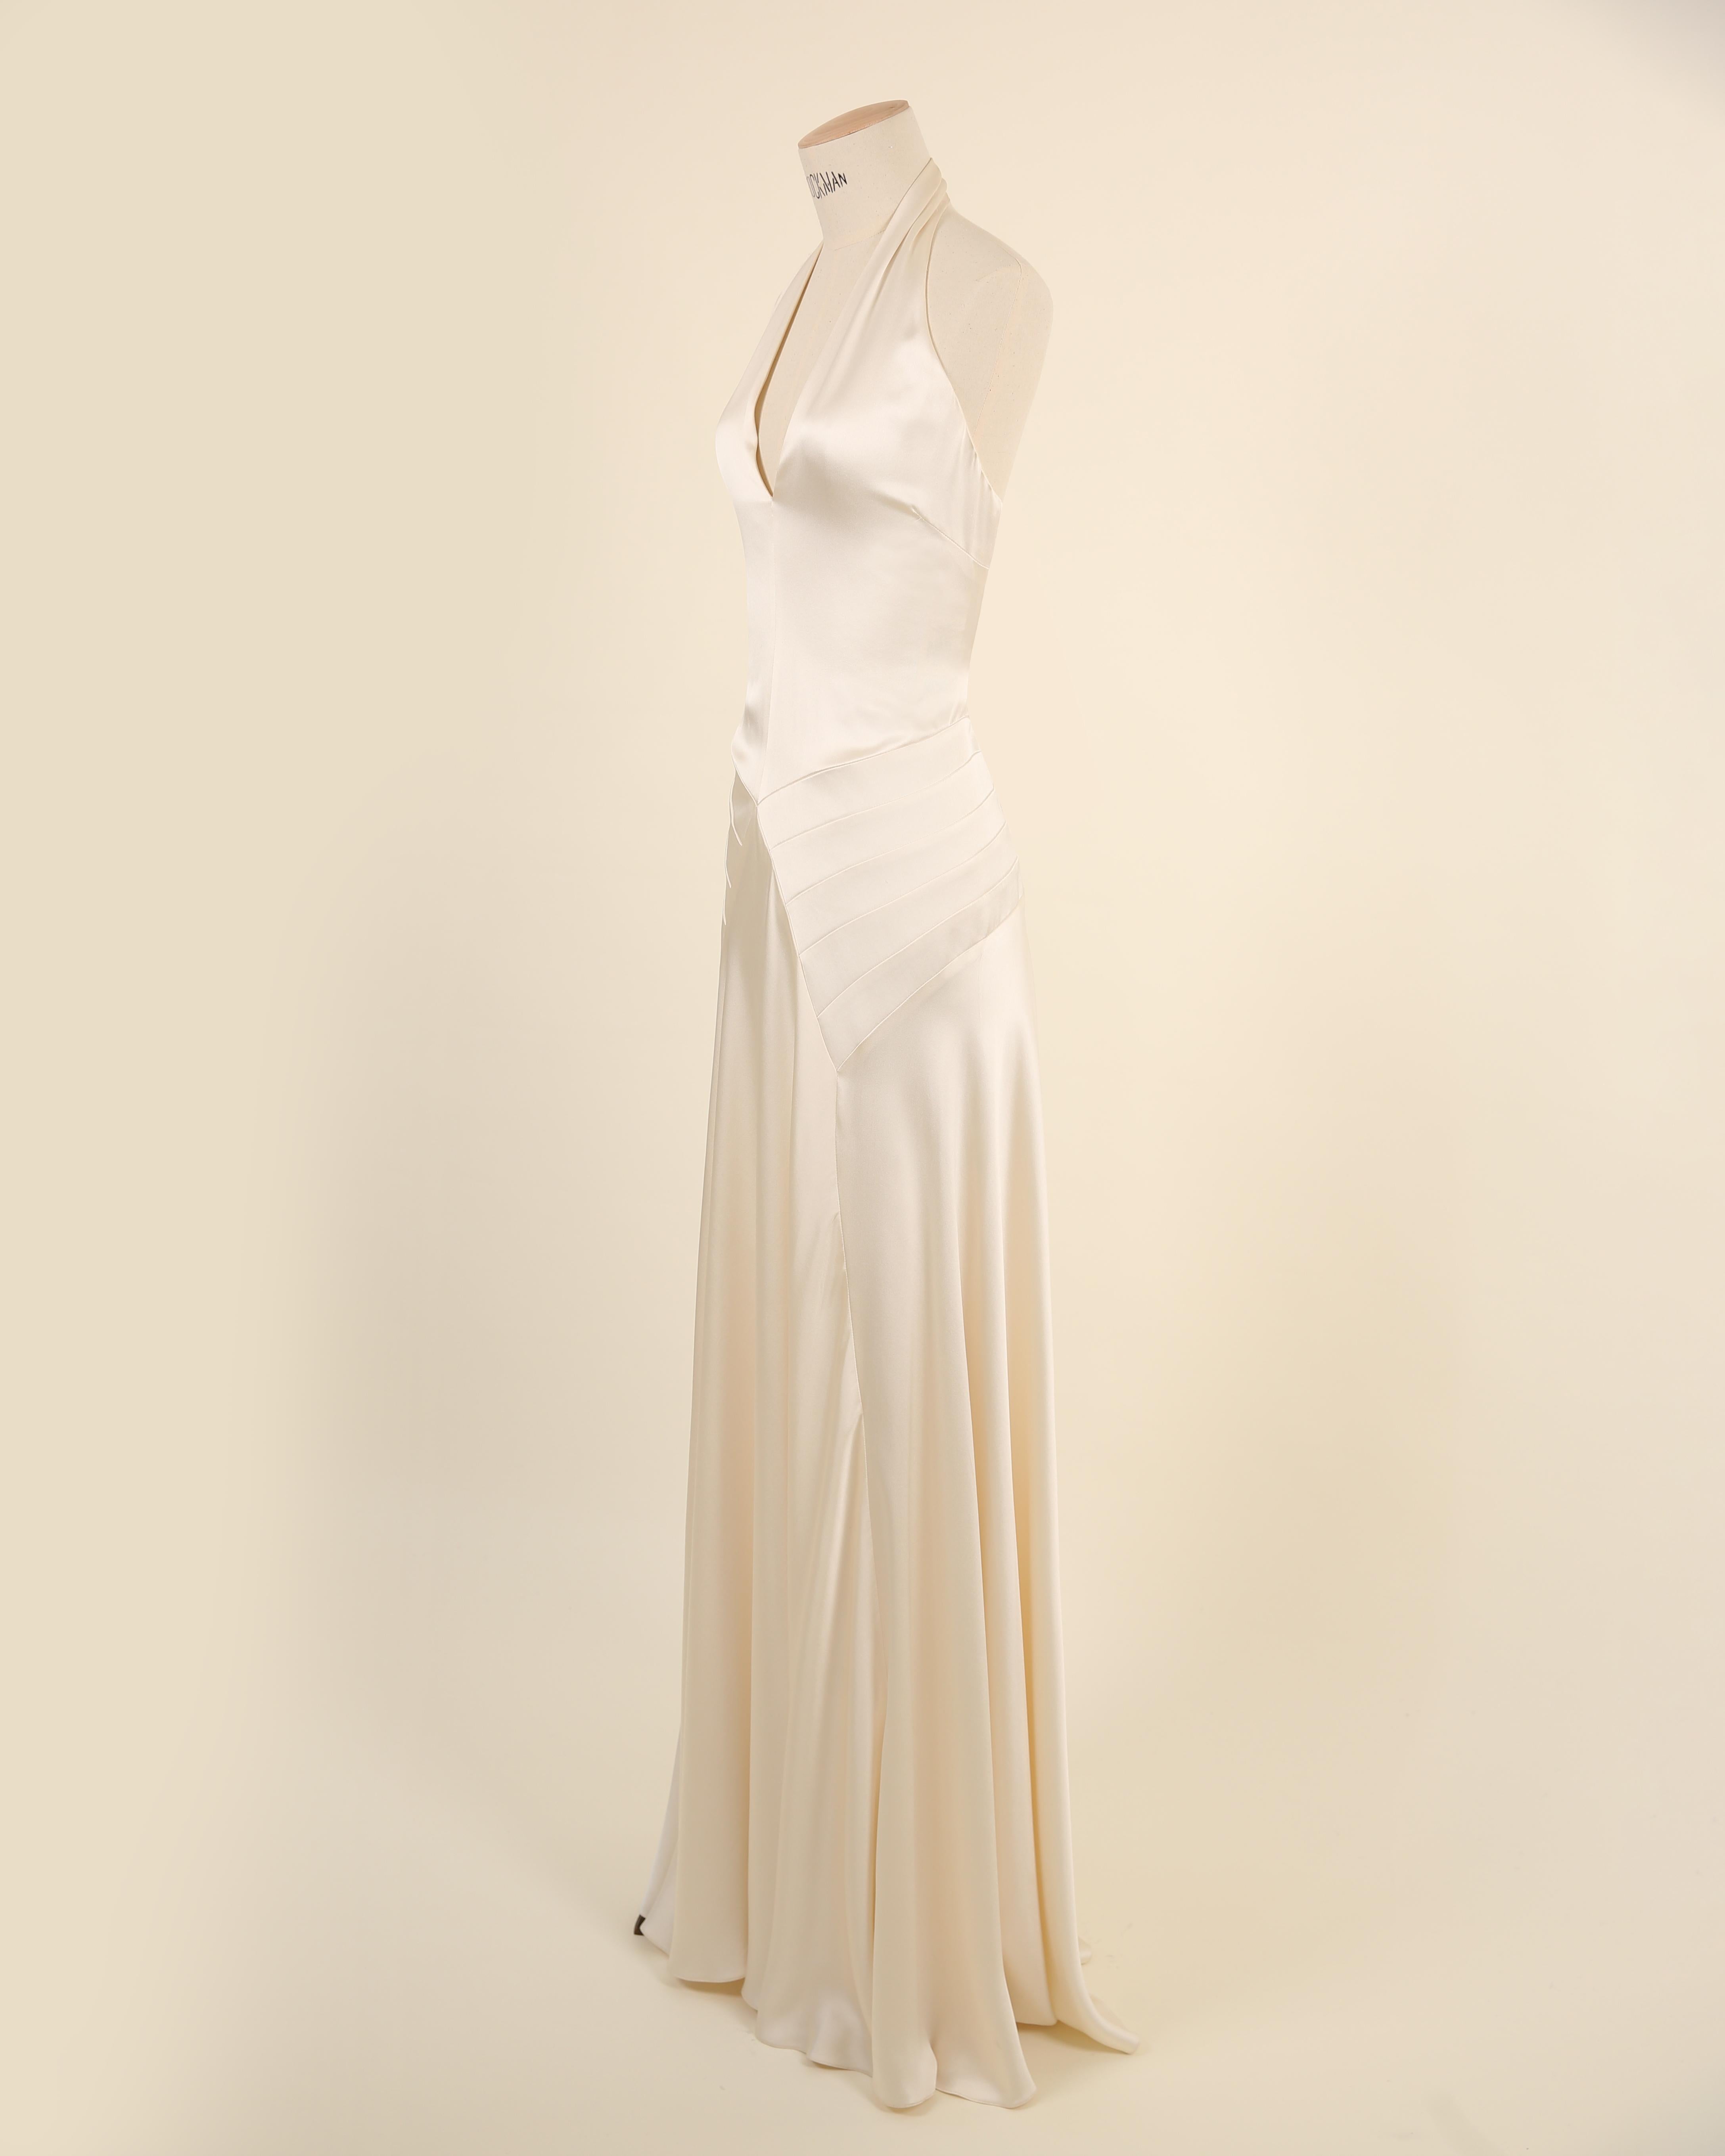 Ralph Lauren S/S 2009 white ivory silk plunging halter neck wedding gown dress For Sale 1